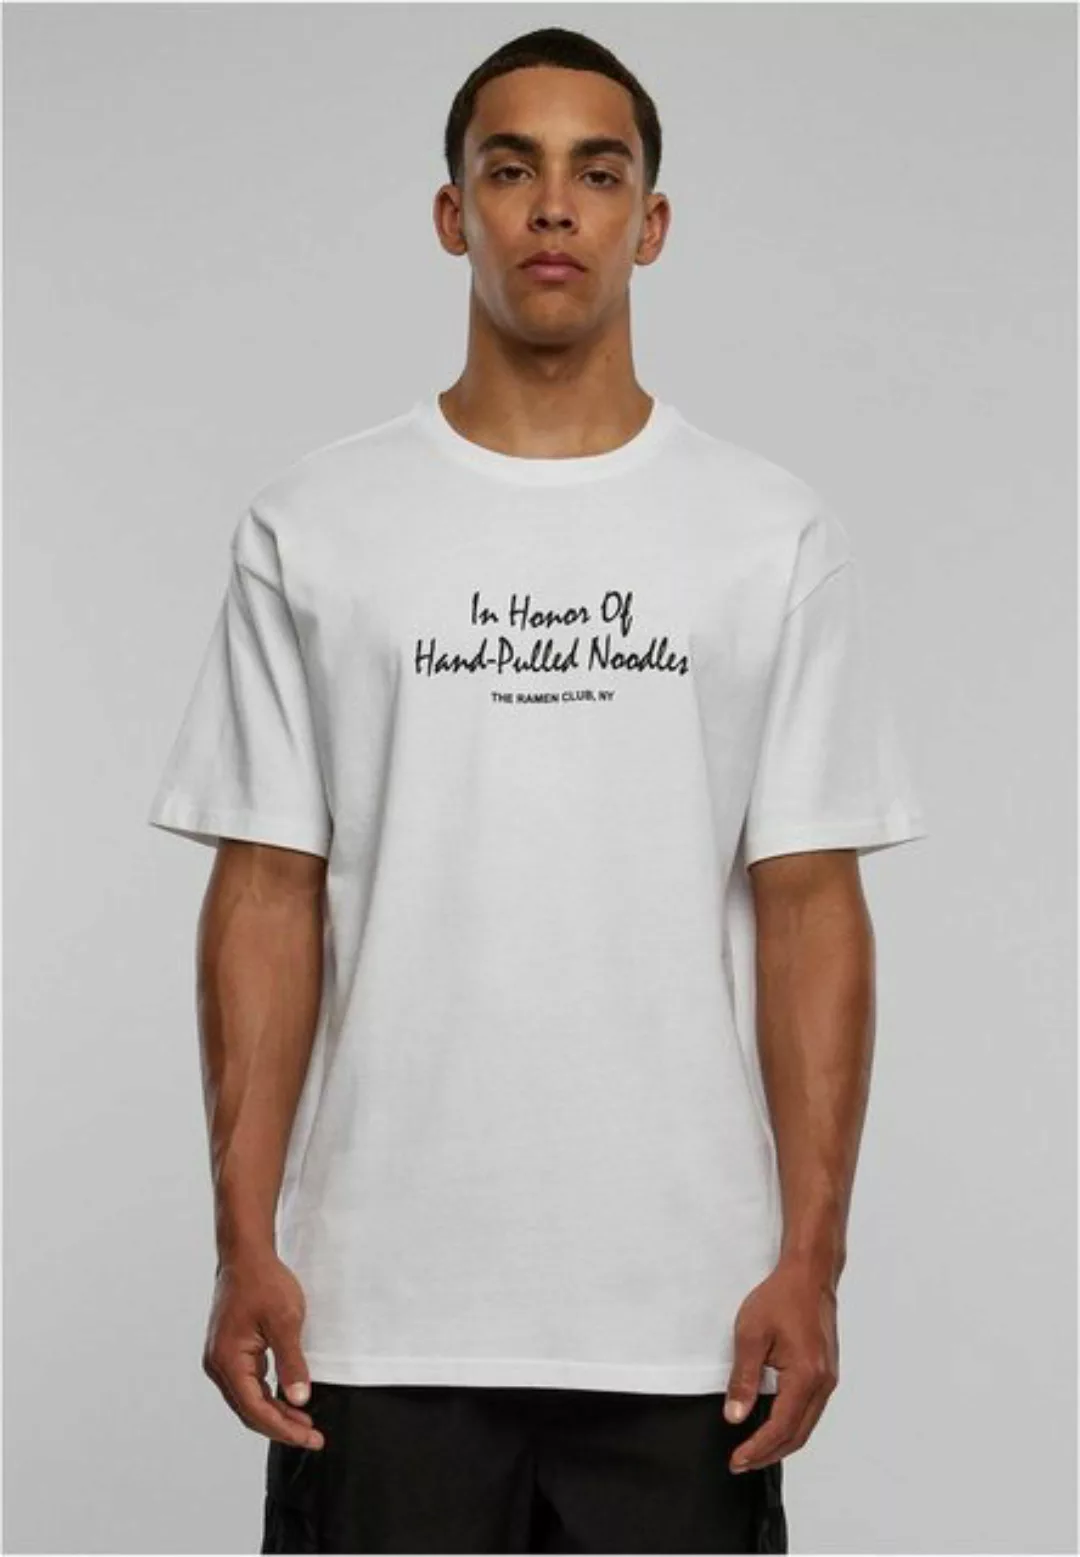 Upscale by Mister Tee T-Shirt Upscale by Mister Tee Herren Ramen Club Heavy günstig online kaufen